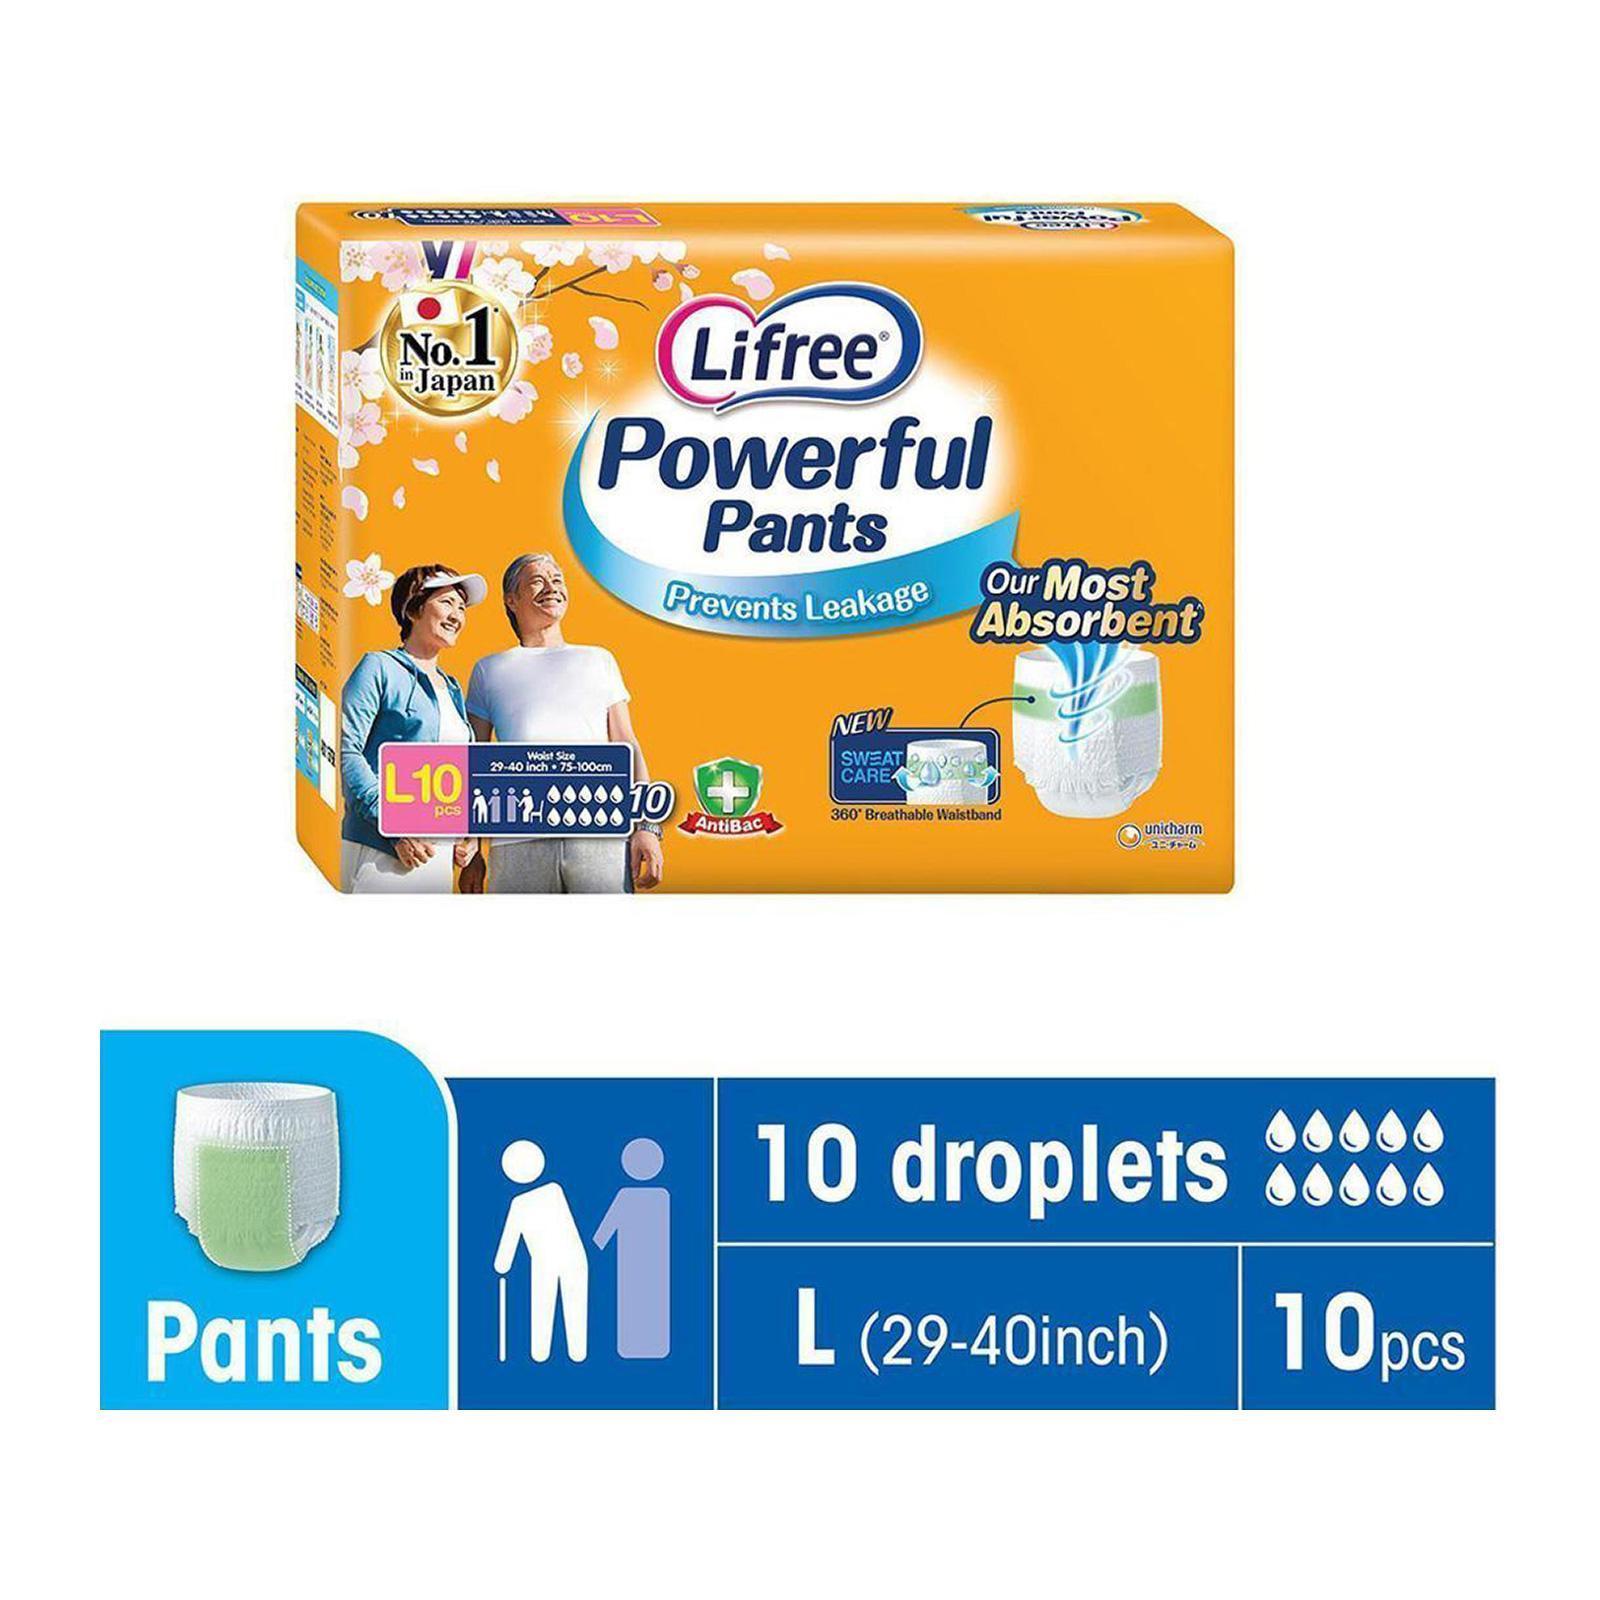 NHG Pharmacy Online-Lifree Powerful Slim Pants Anti-Bac Extra Large 9s x 4